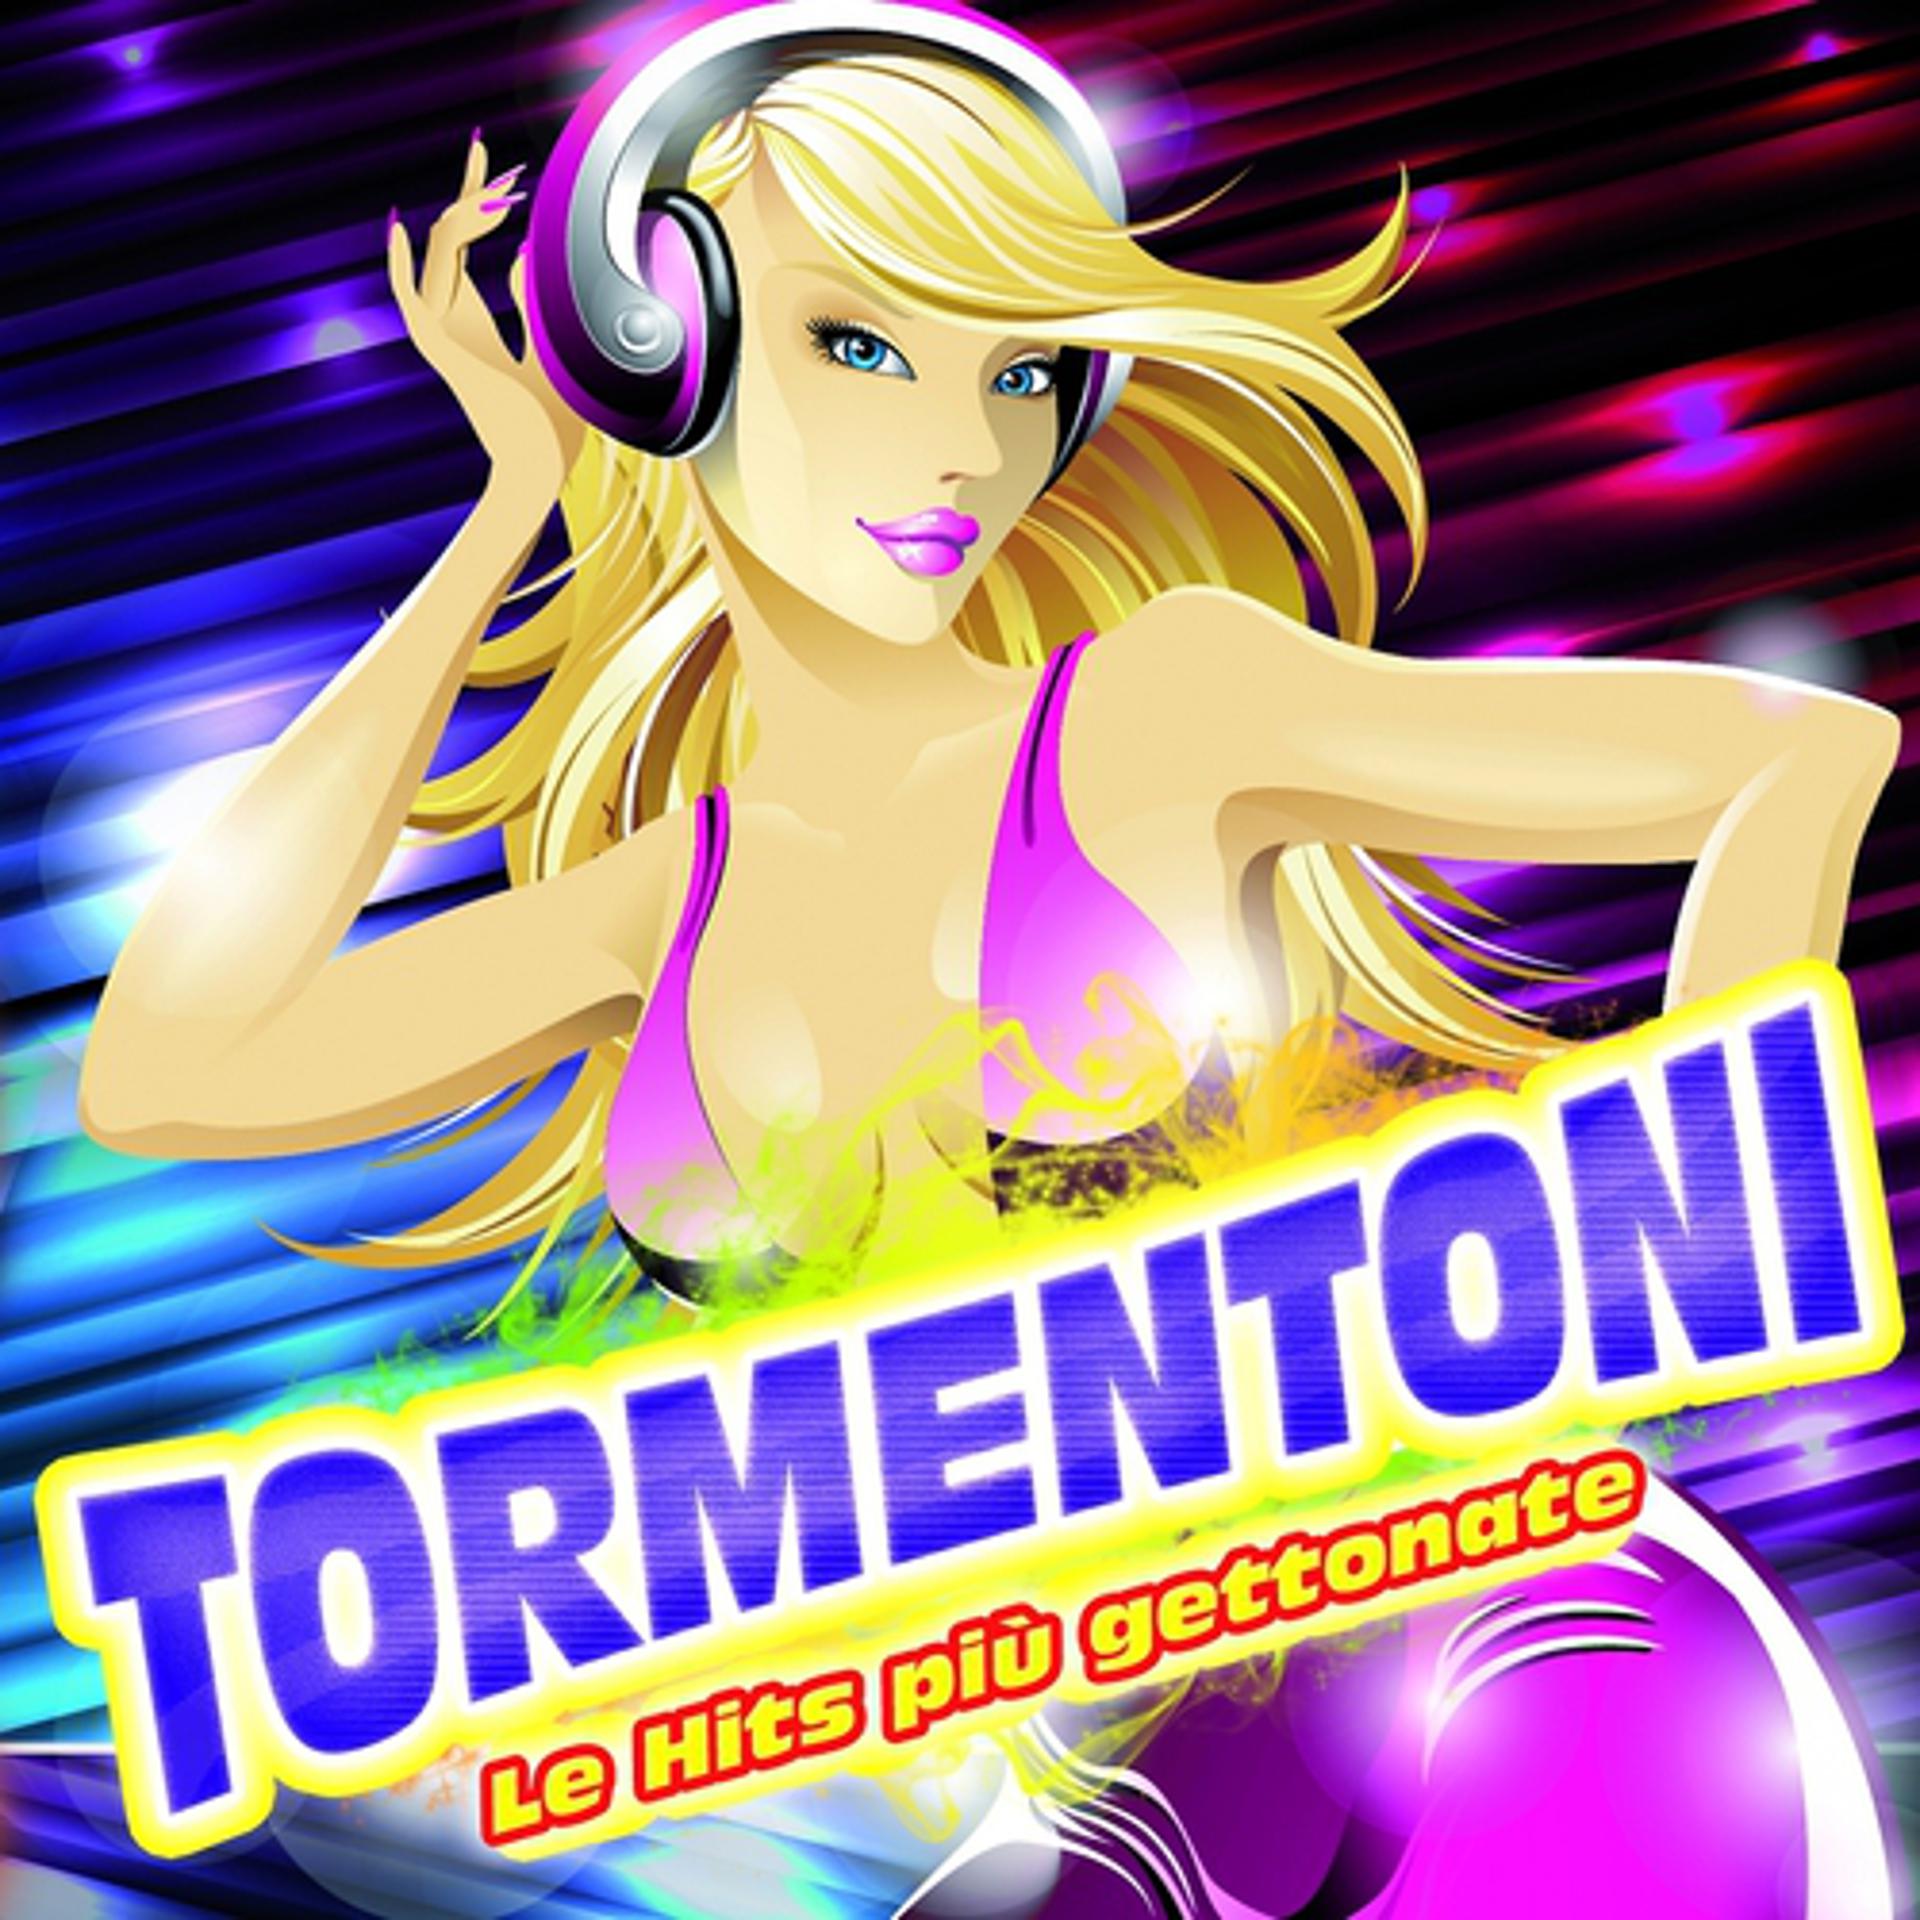 Постер альбома Tormentoni